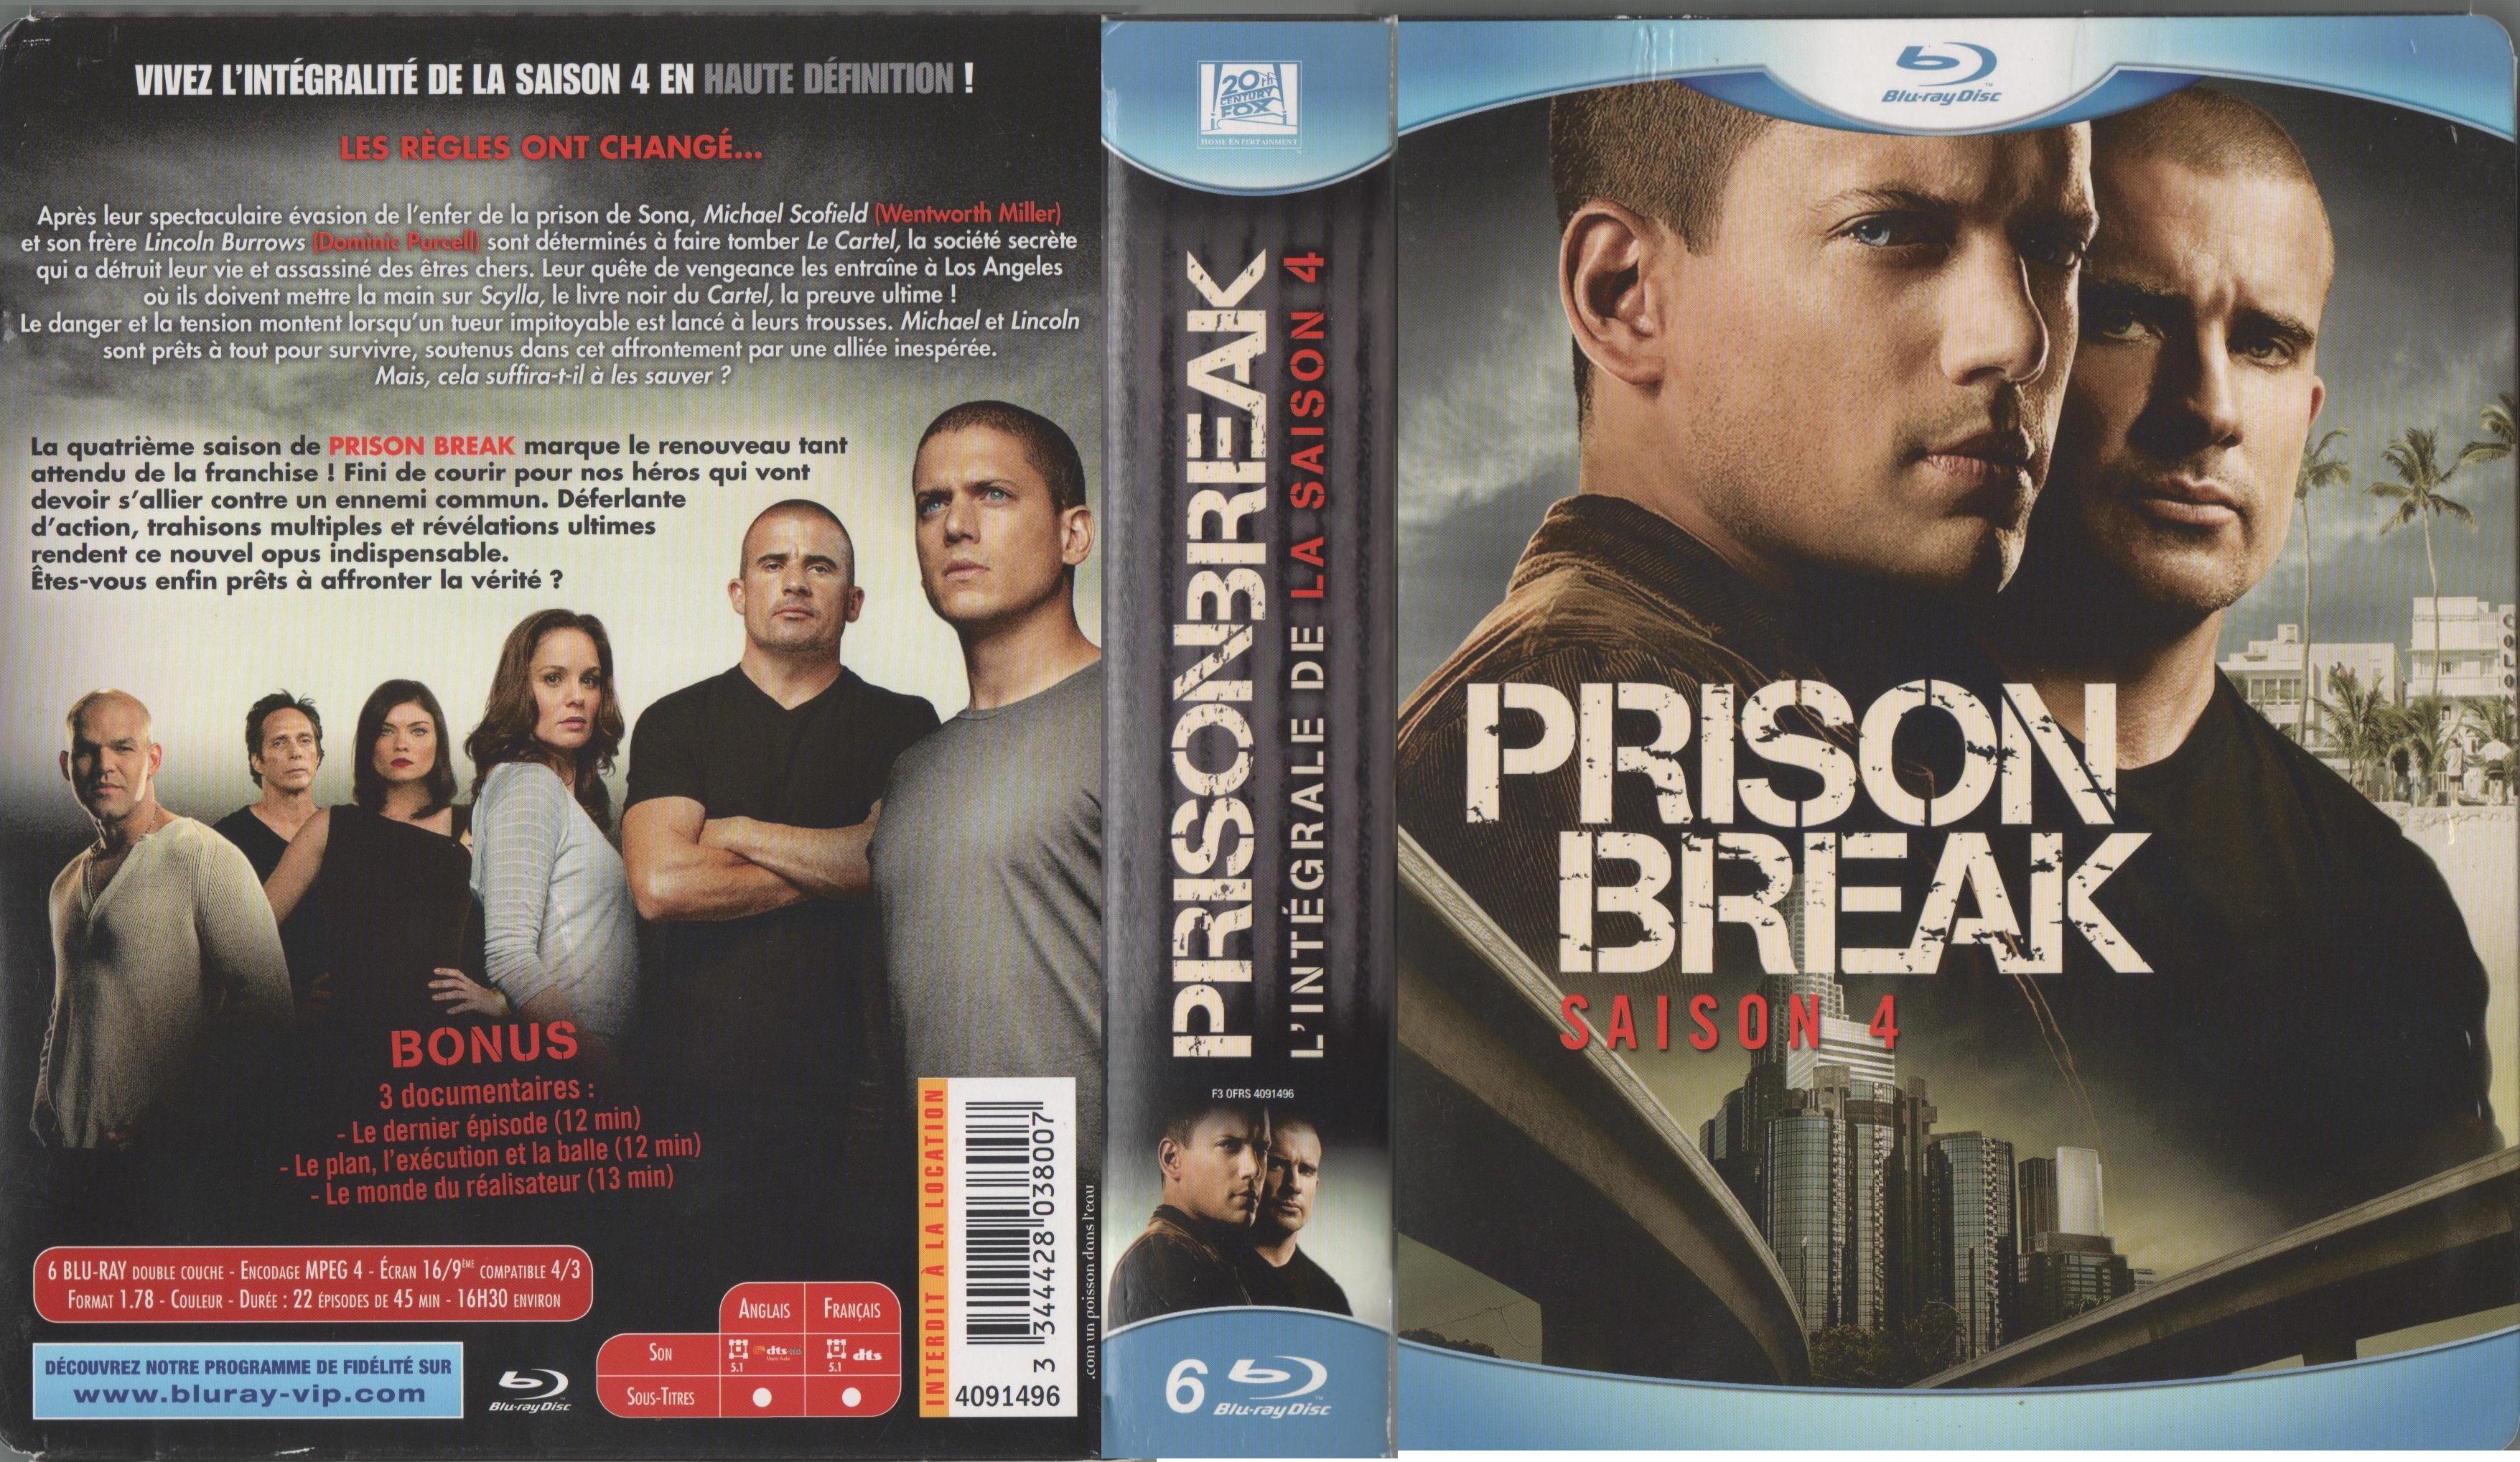 Jaquette DVD Prison break Saison 4 COFFRET (BLU-RAY)